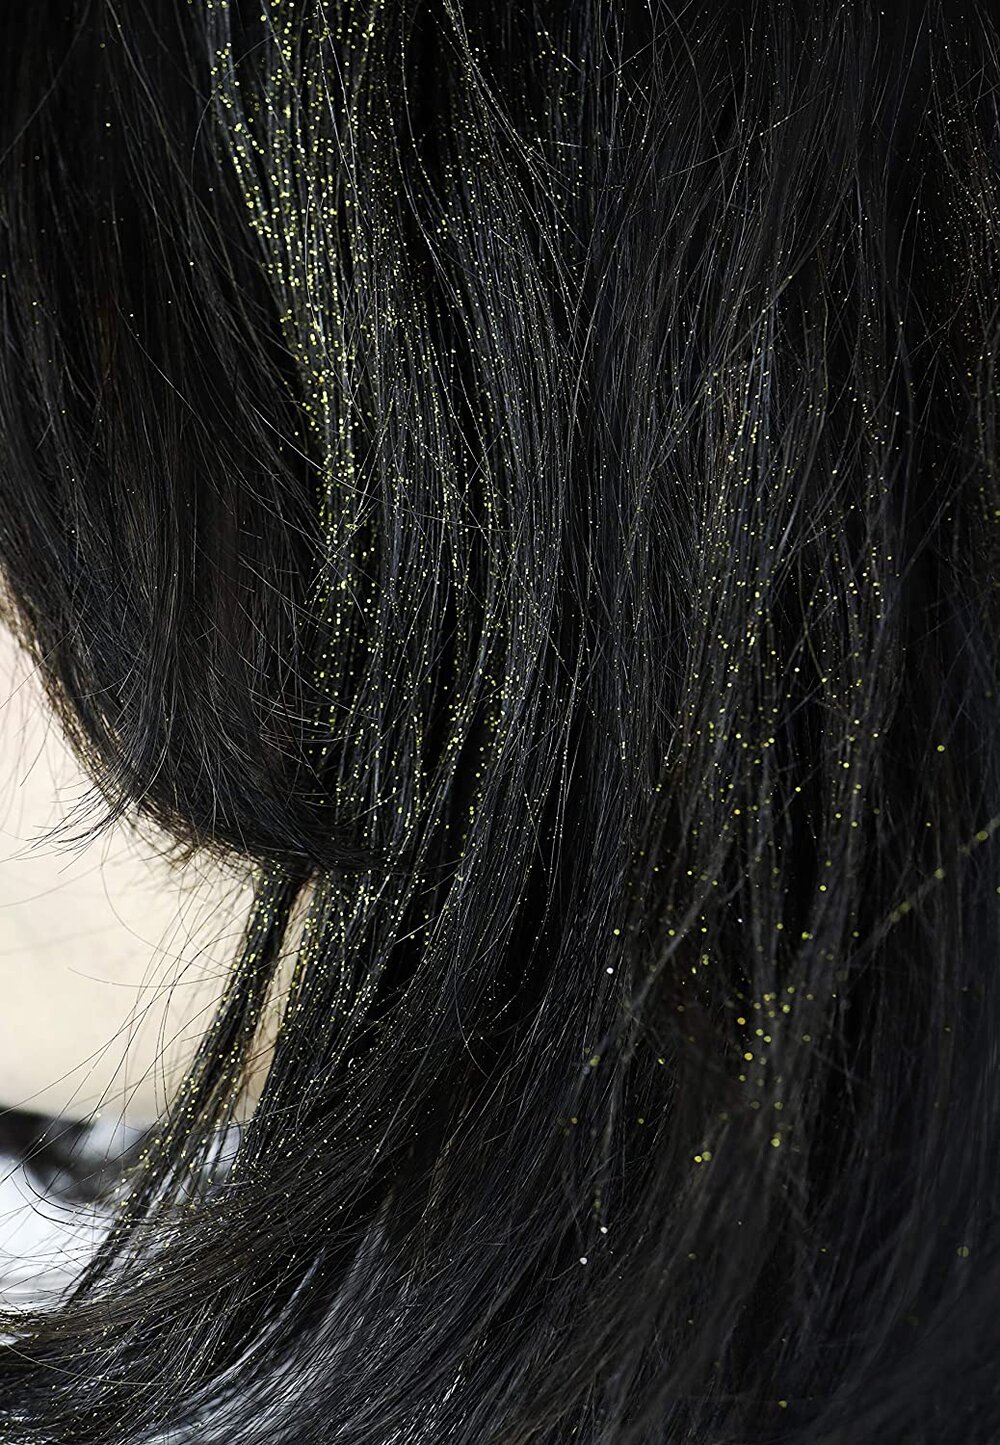 CAI BEAUTY NYC Hair and Body Glitter Spray - Glitter Gold — Cai Cosmetics